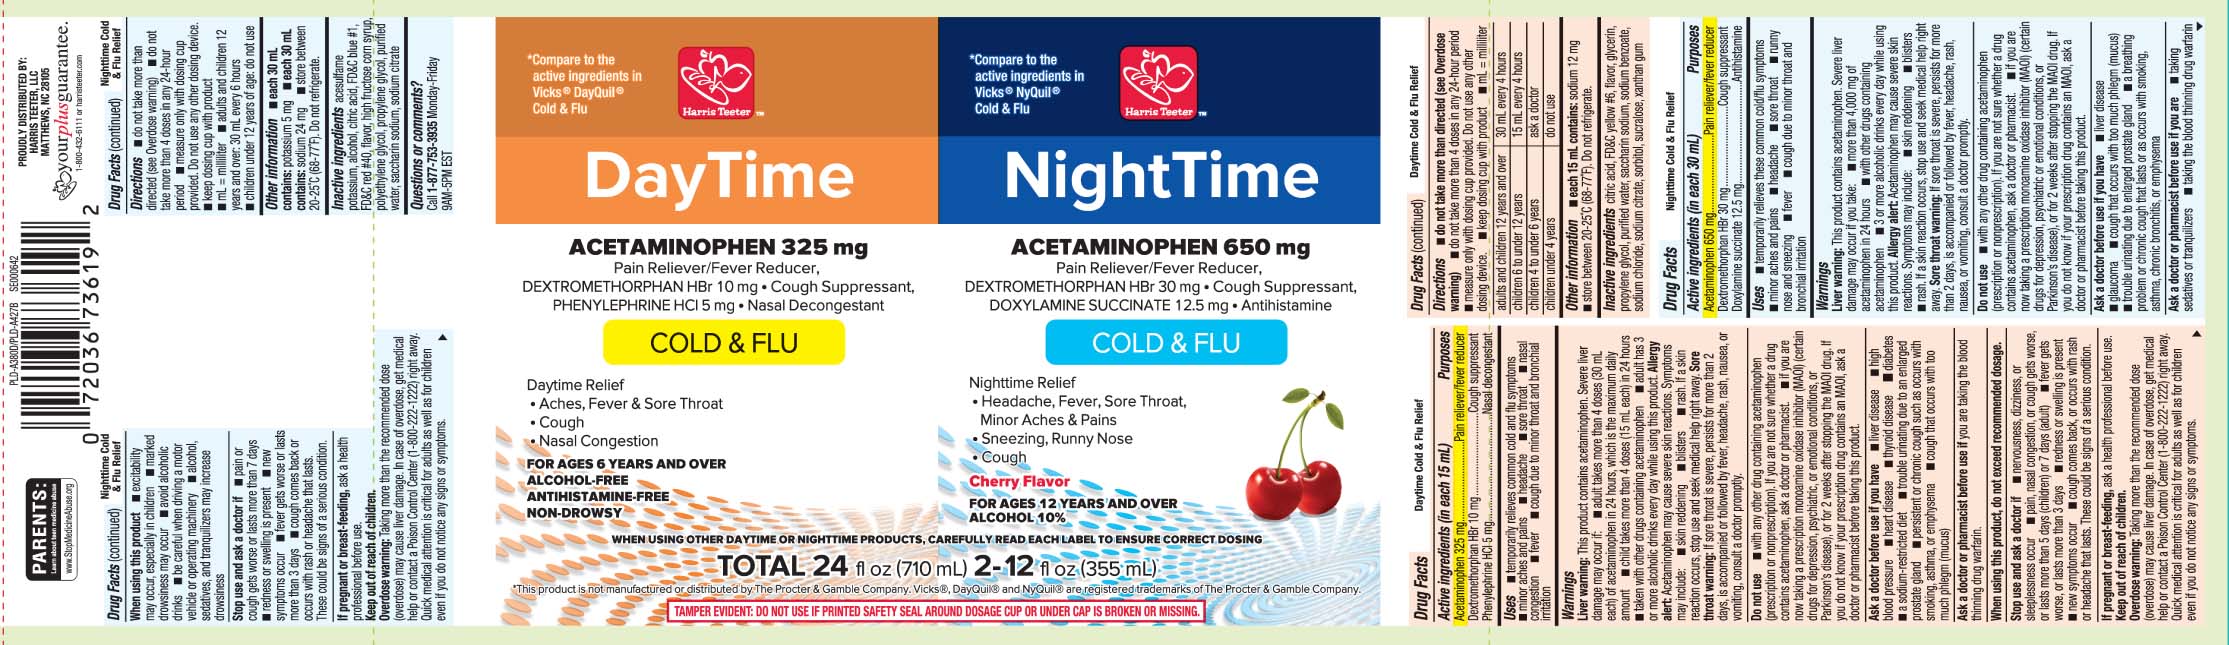 Acetaminophen 325 mg, Dextromethorphan HBr 10 mg, Phenylephrine HCl 5 mg, Acetaminophen 650 mg, Dextromethorphan HBr 30 mg, Doxylamine Succinate 12.5 mg